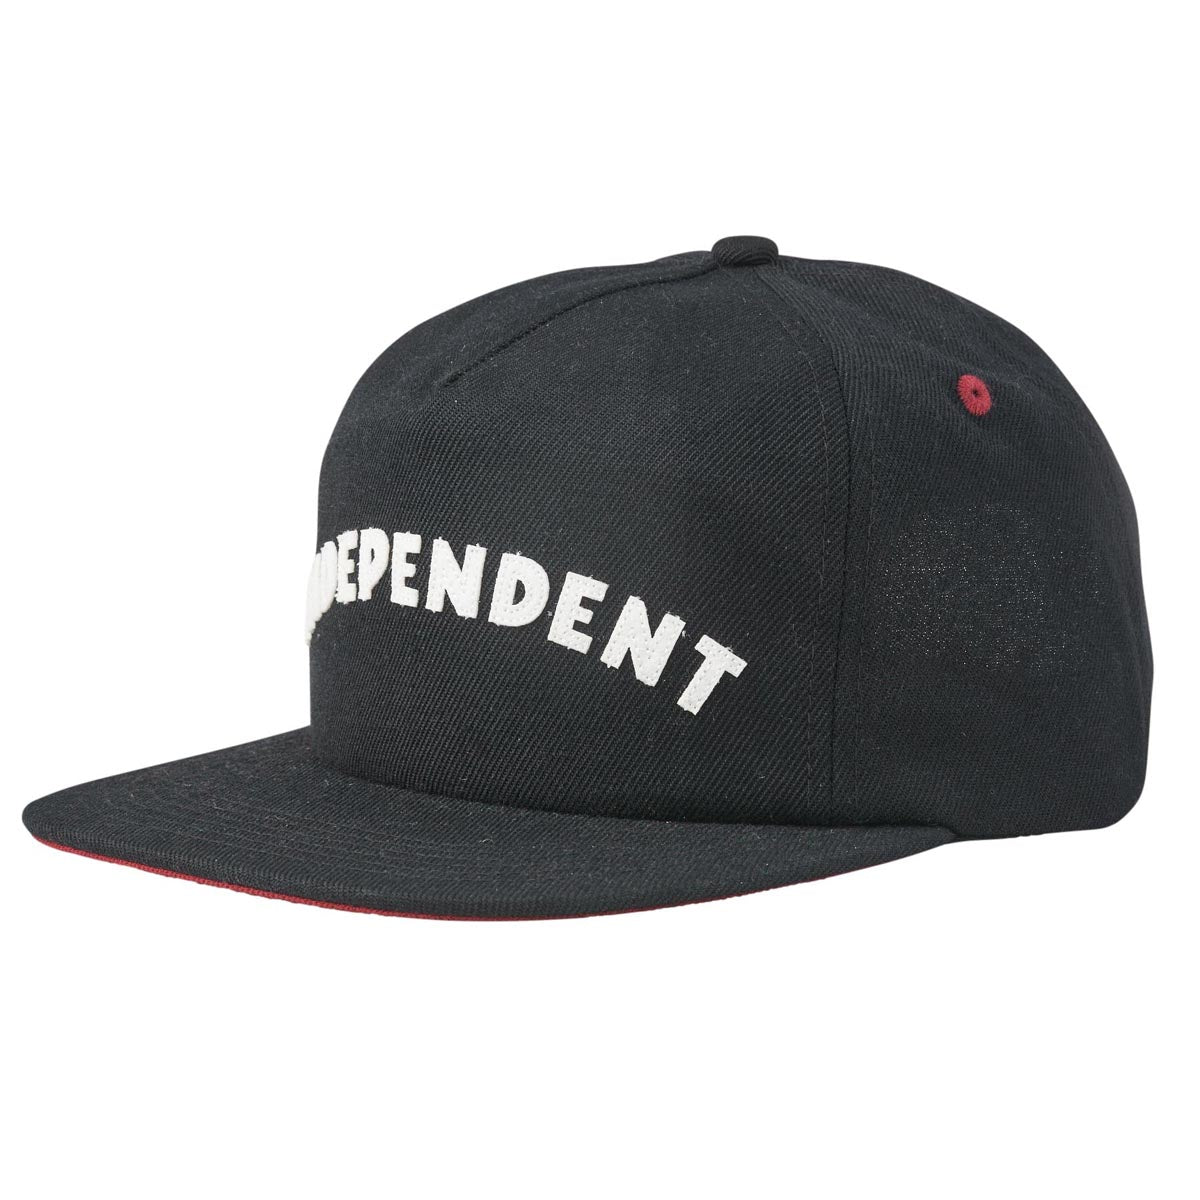 Independent Brigade Strapback Unstructured Hat - Black image 1